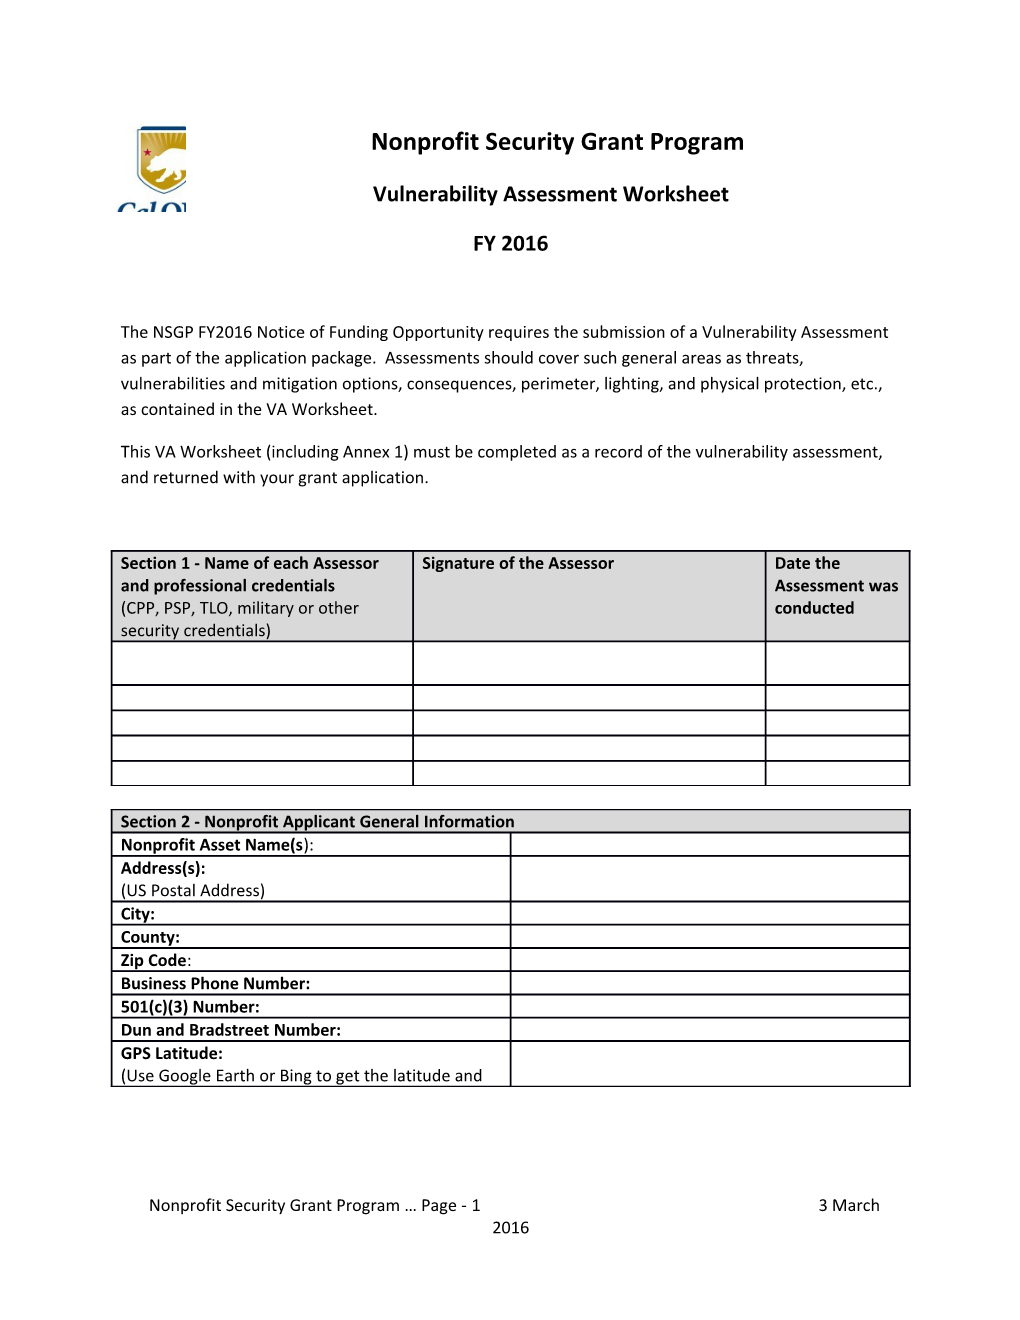 FY 2016 NSGP Vulnerability Assessment Worksheet